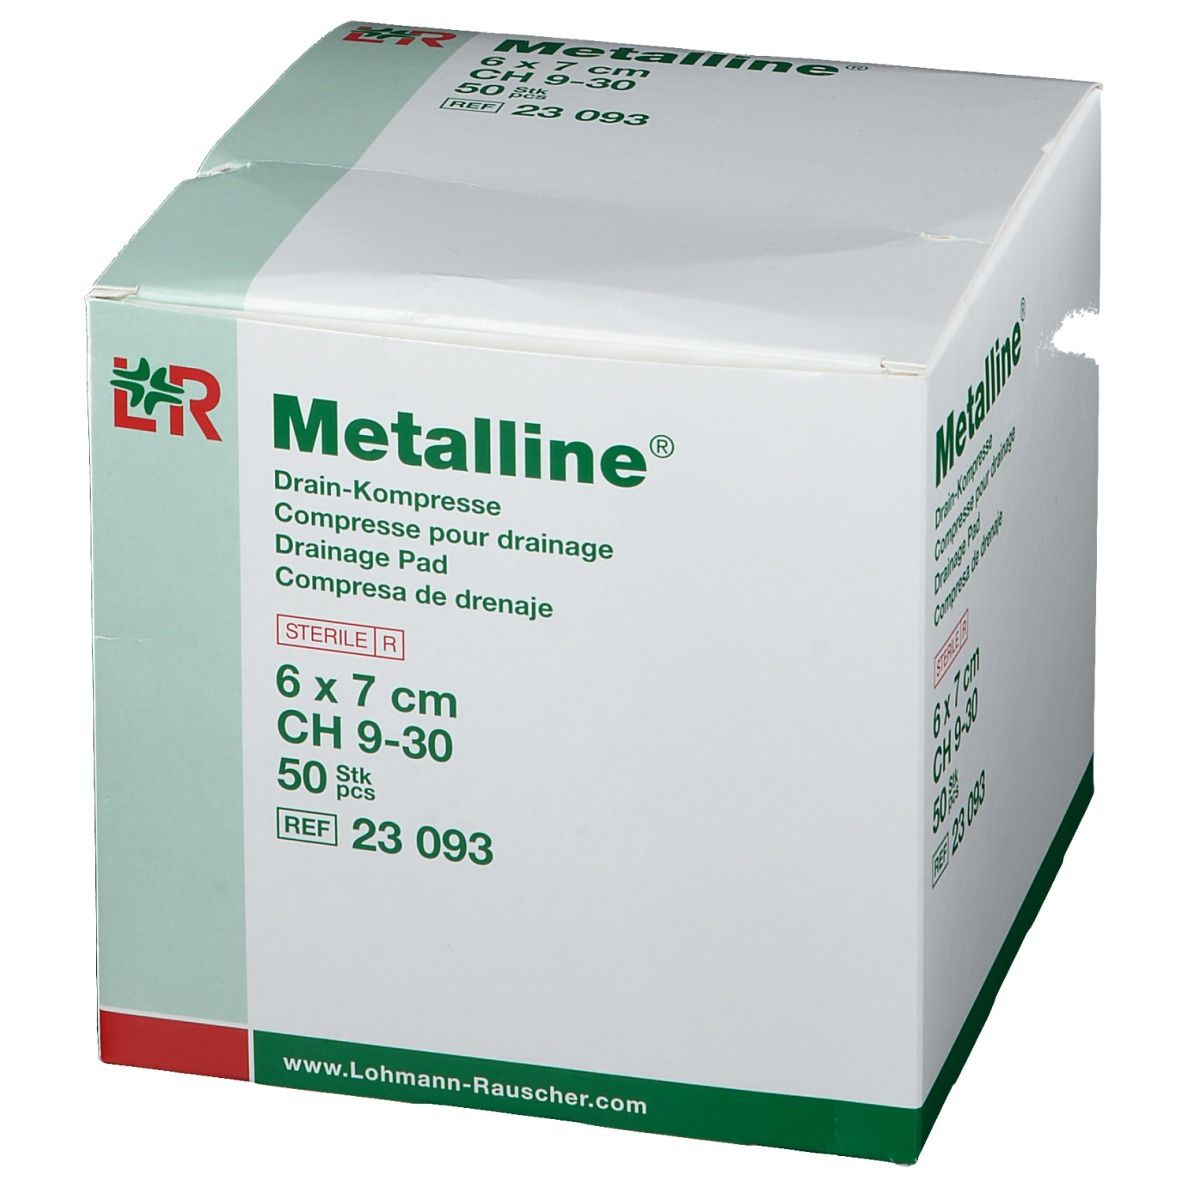 Metalline® Drain-Kompresse 6 cm x 7 cm steril